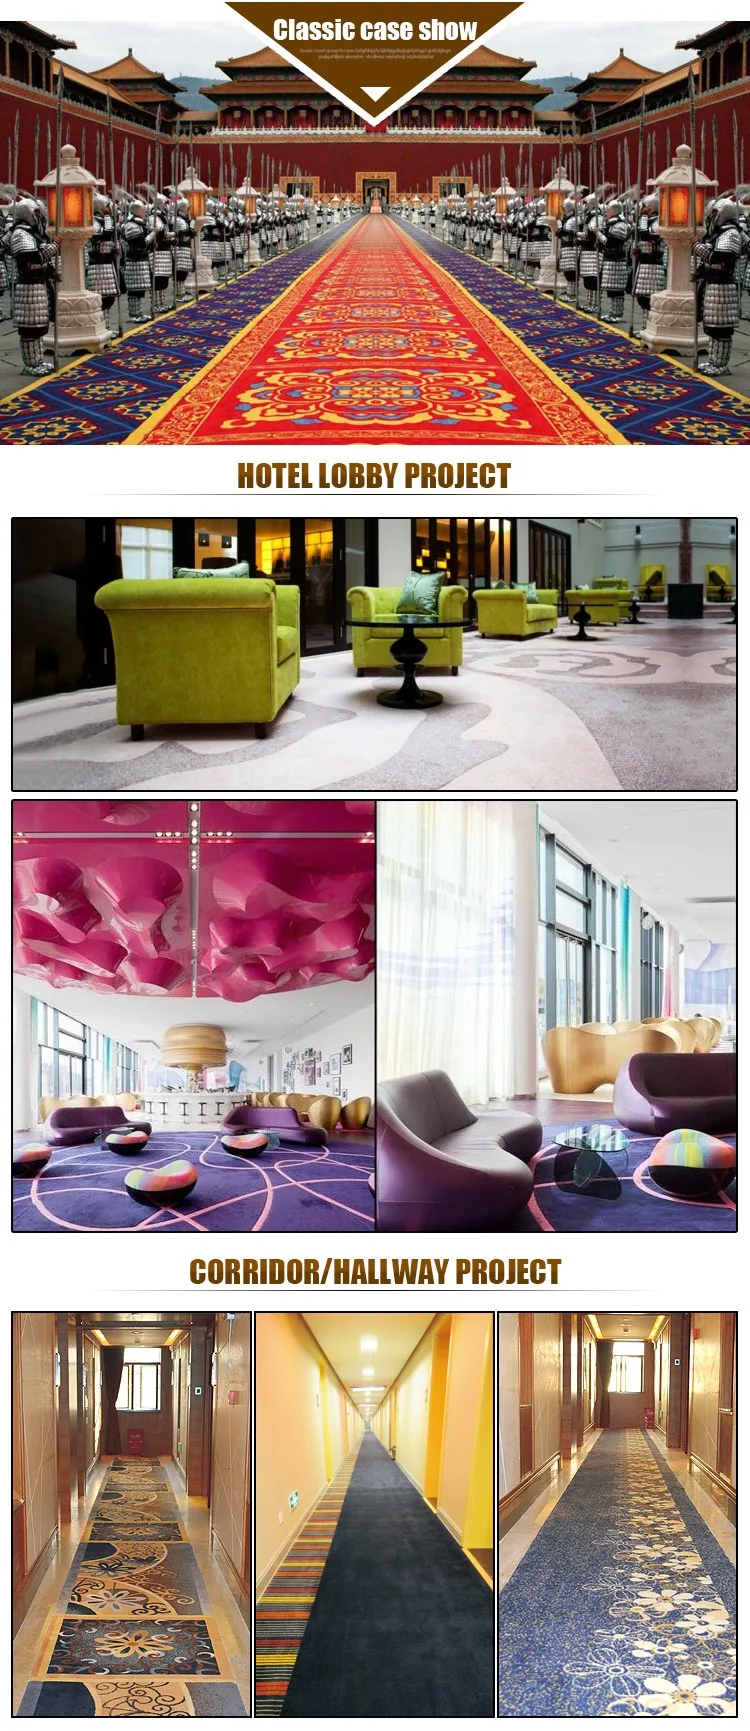 5 Star Hotel Luxury Hotel Corridor Nylon Printed Carpet made of 100% Polyamide